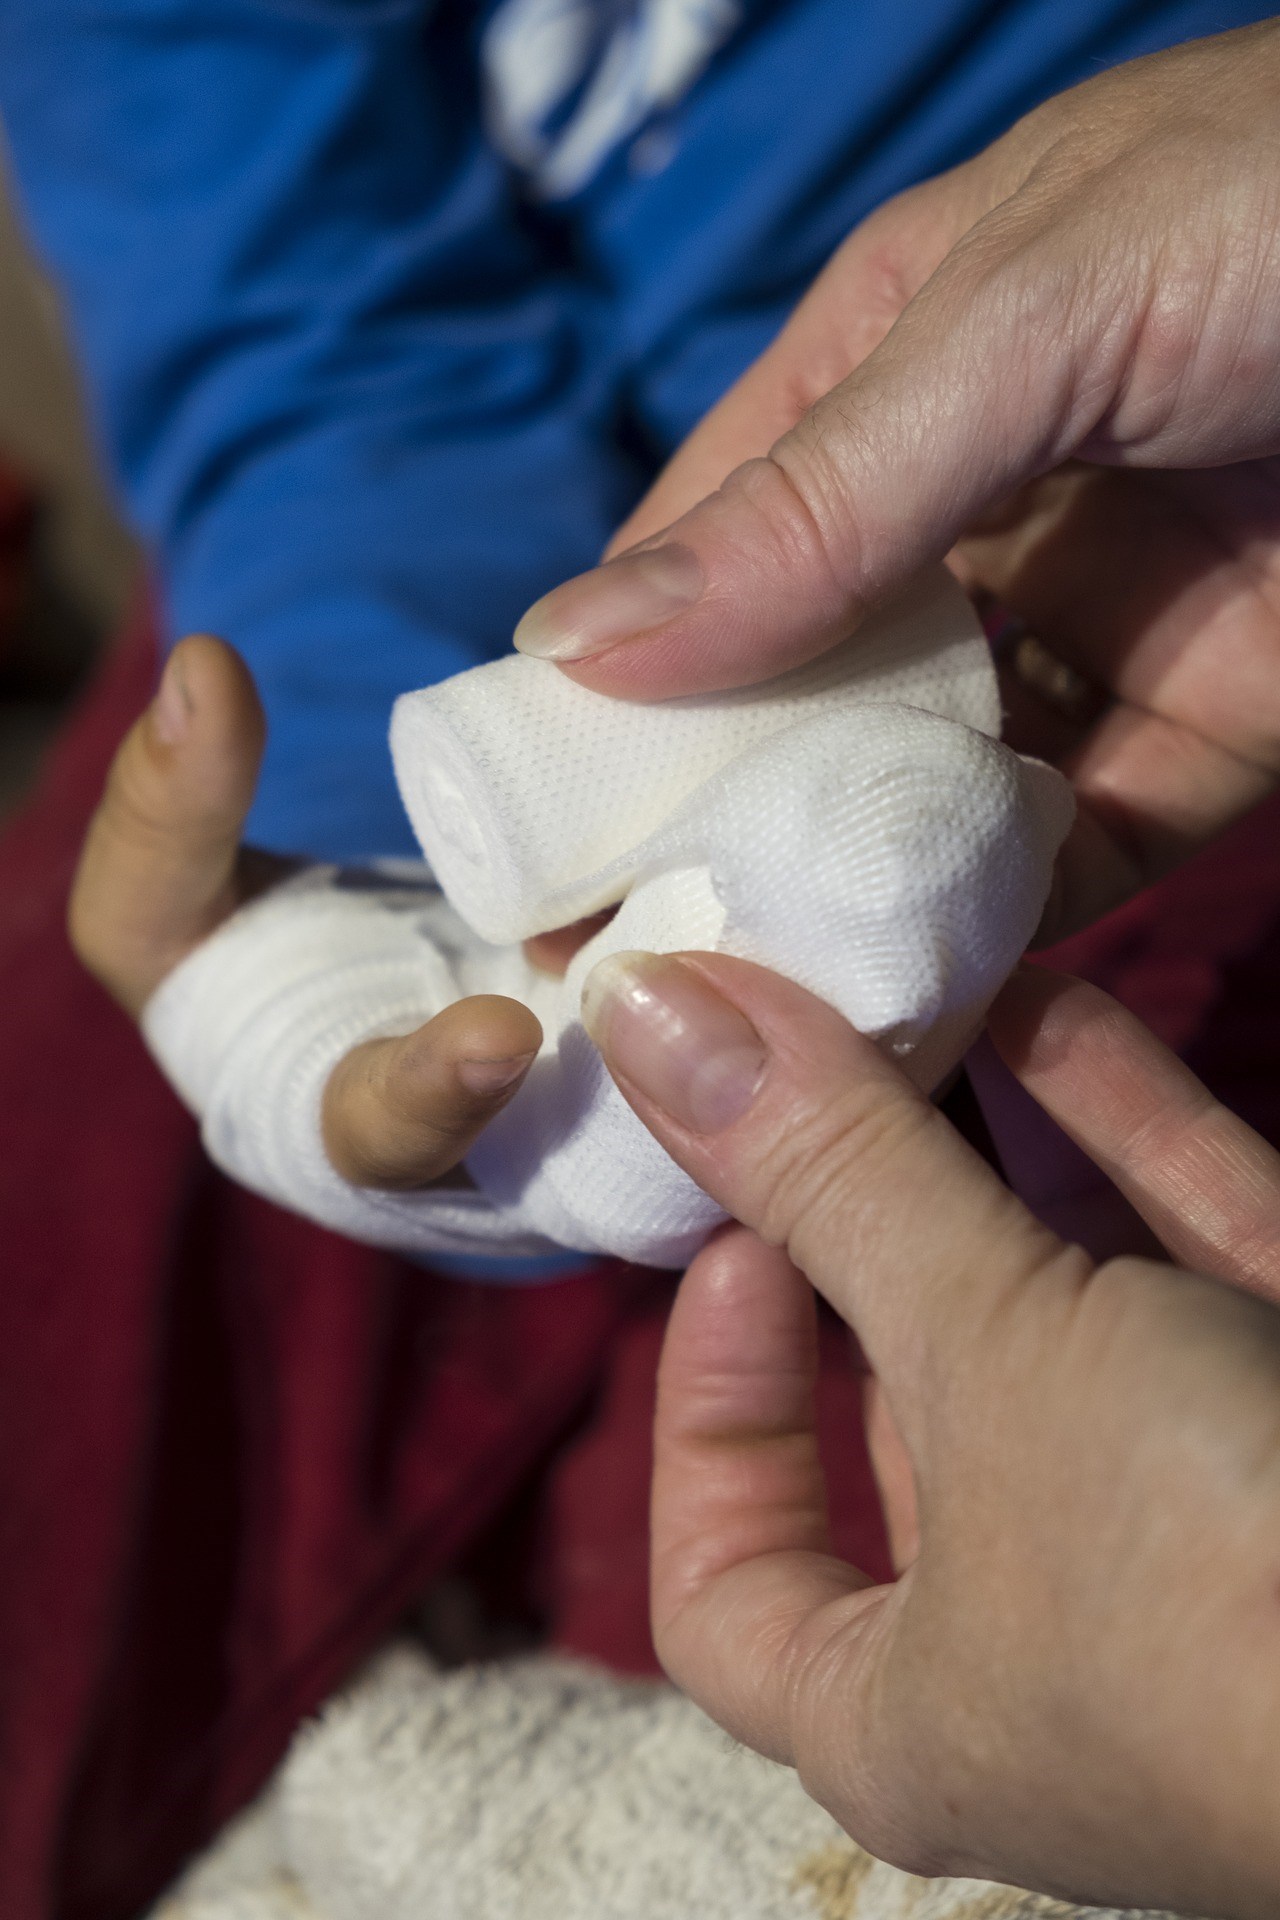 Hand being bandaged